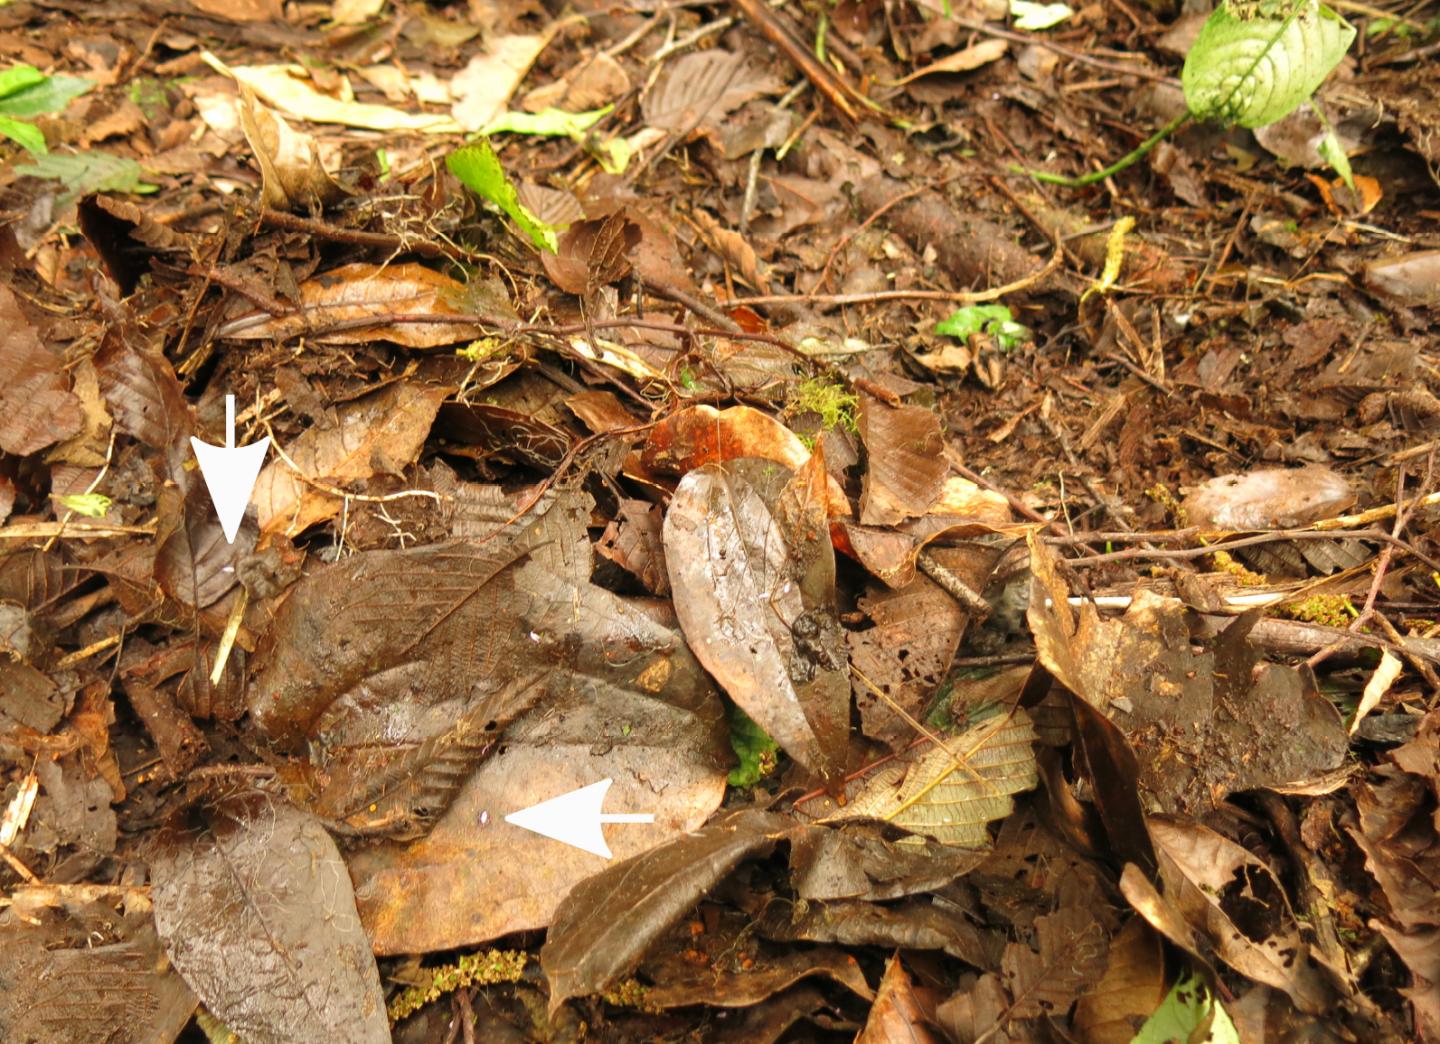 The New Species (<i>Carychium panamaense</i>) on Leaves